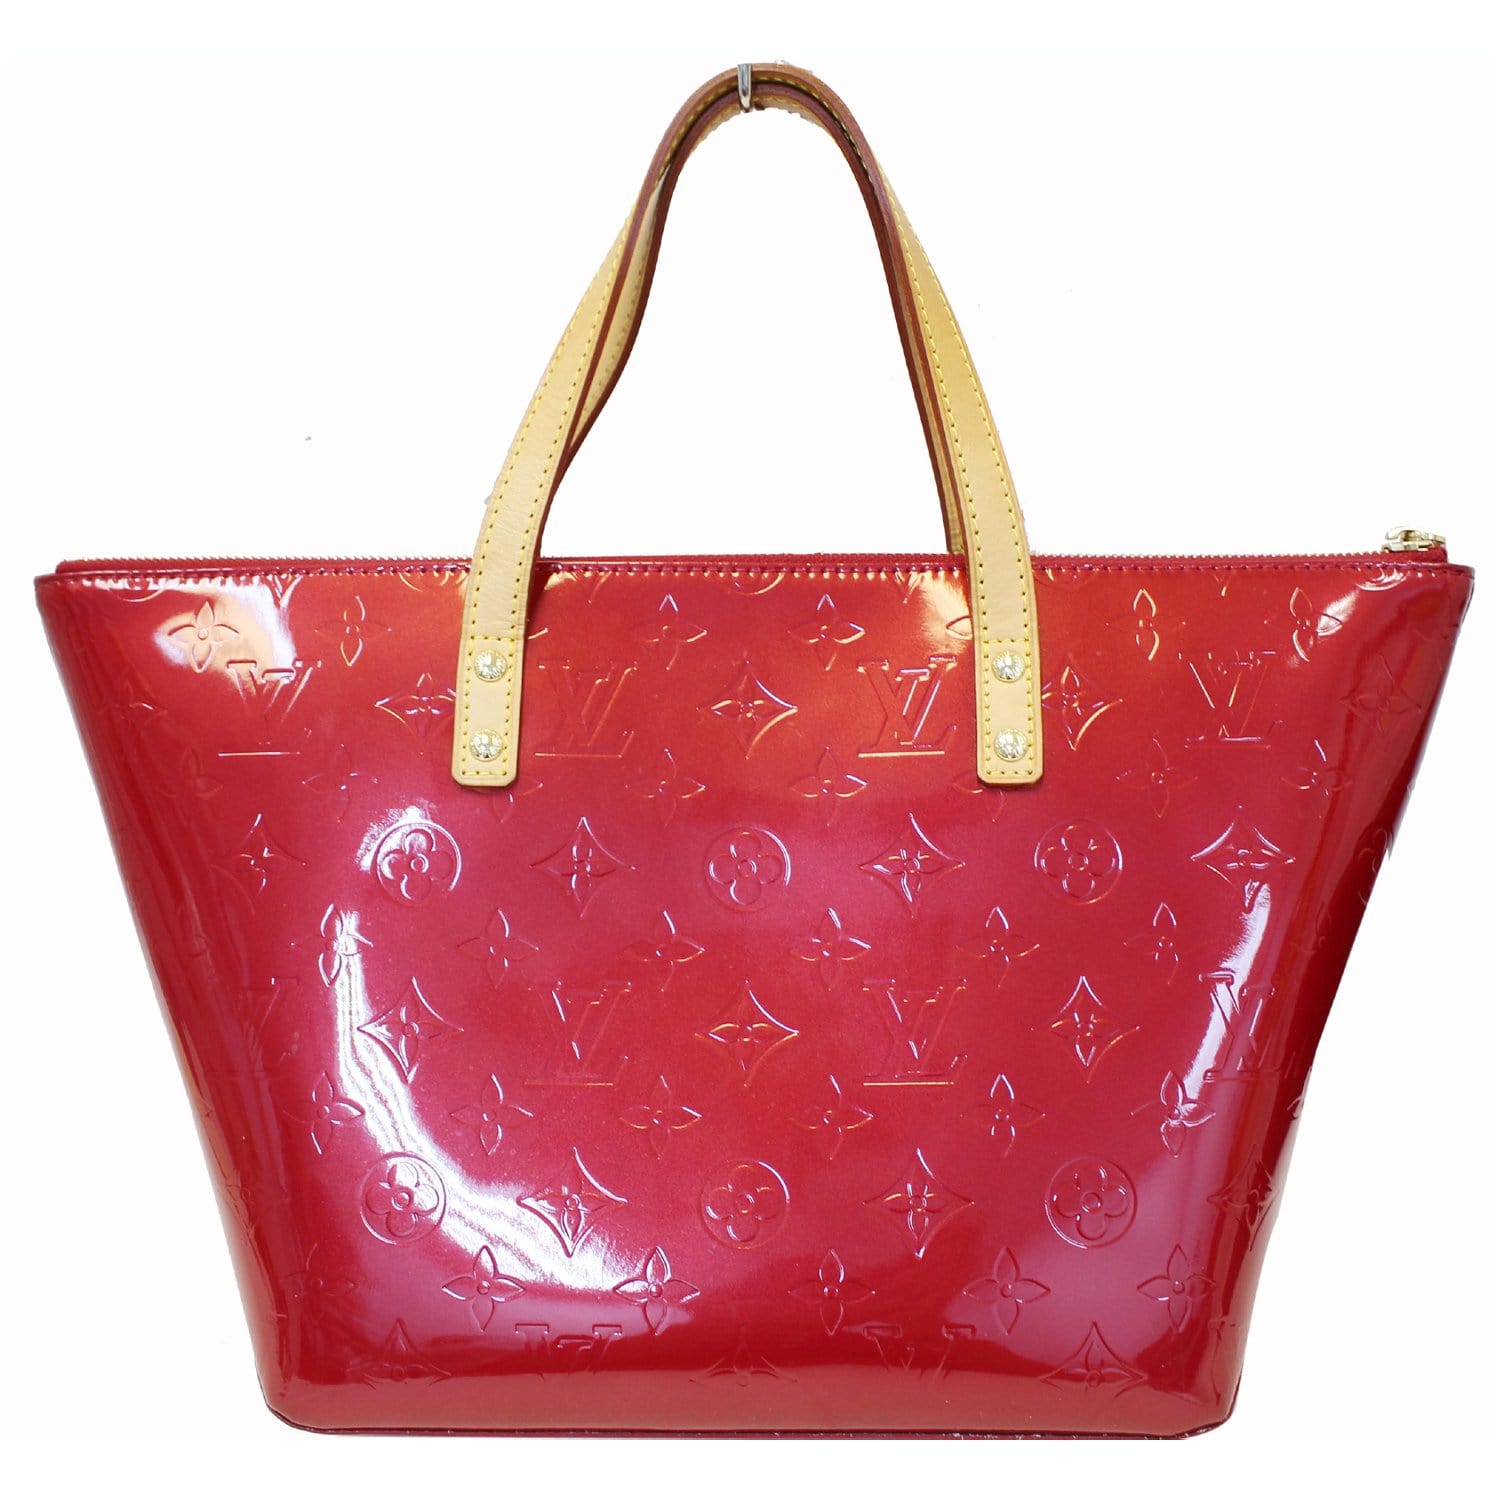 Louis Vuitton Bellevue PM Bag and Free Vernis Wallet Combo